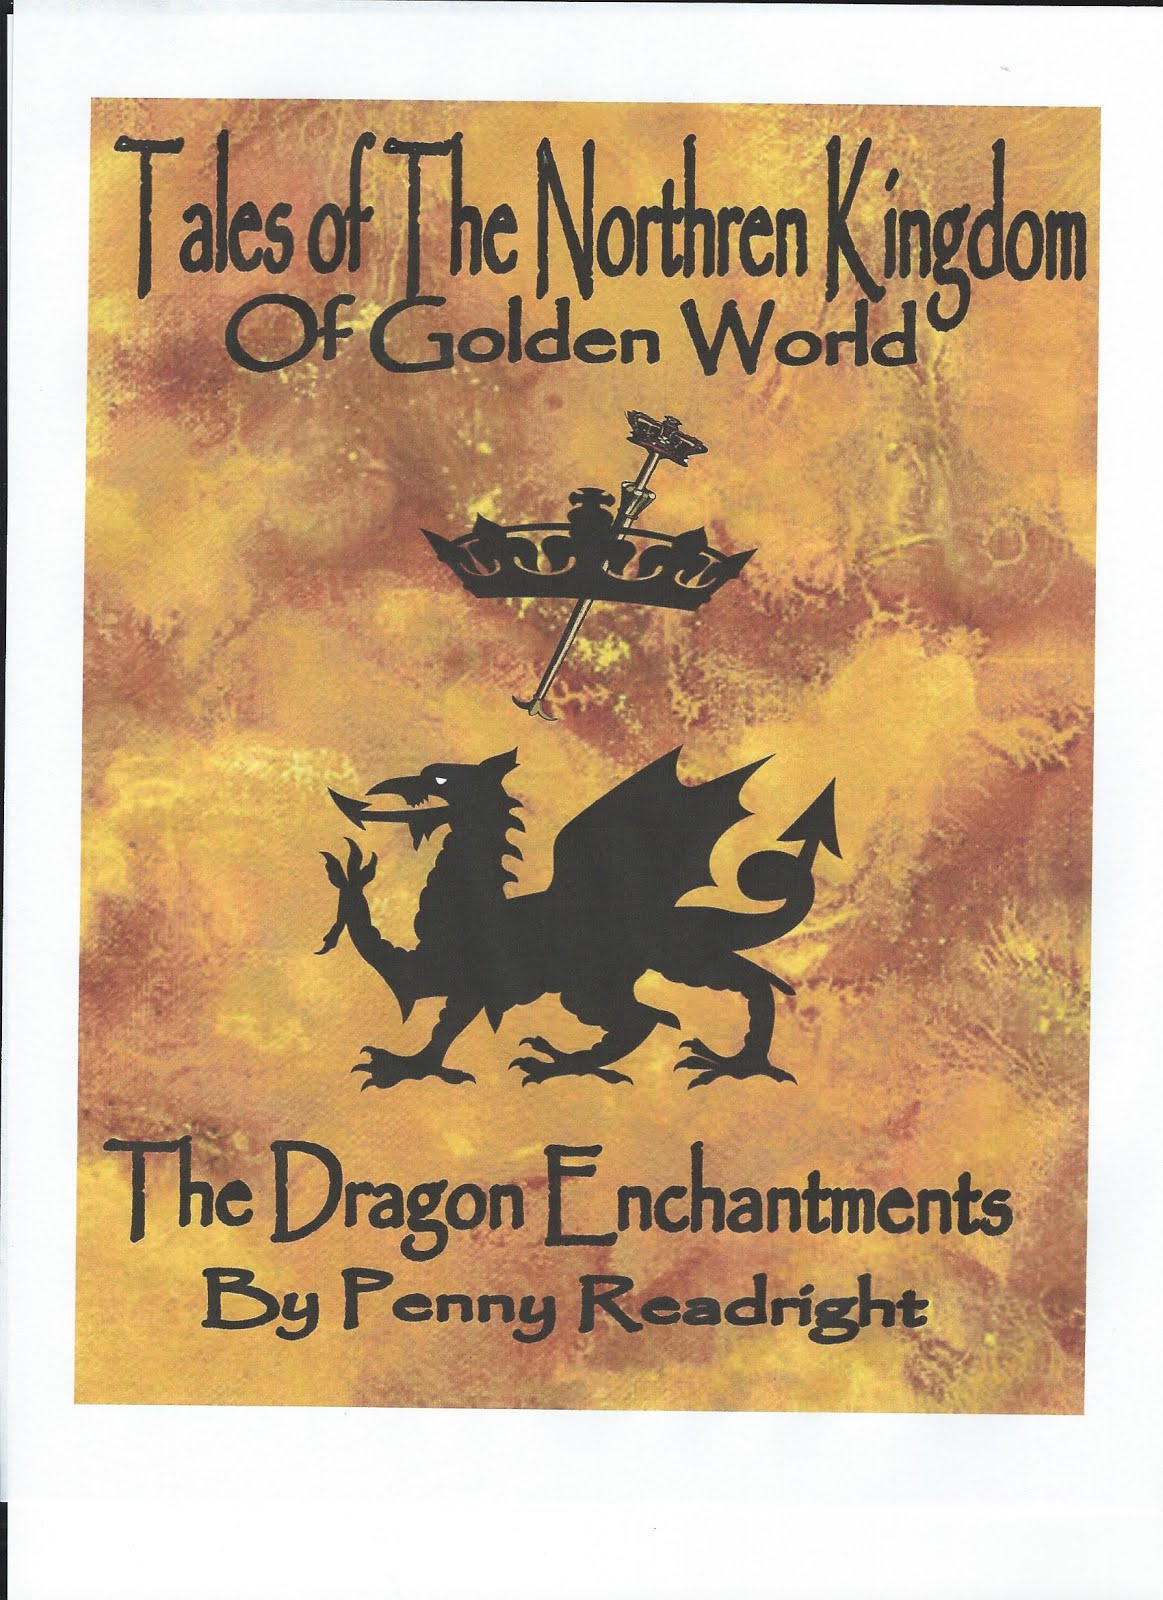 The Dragon's Enchantment